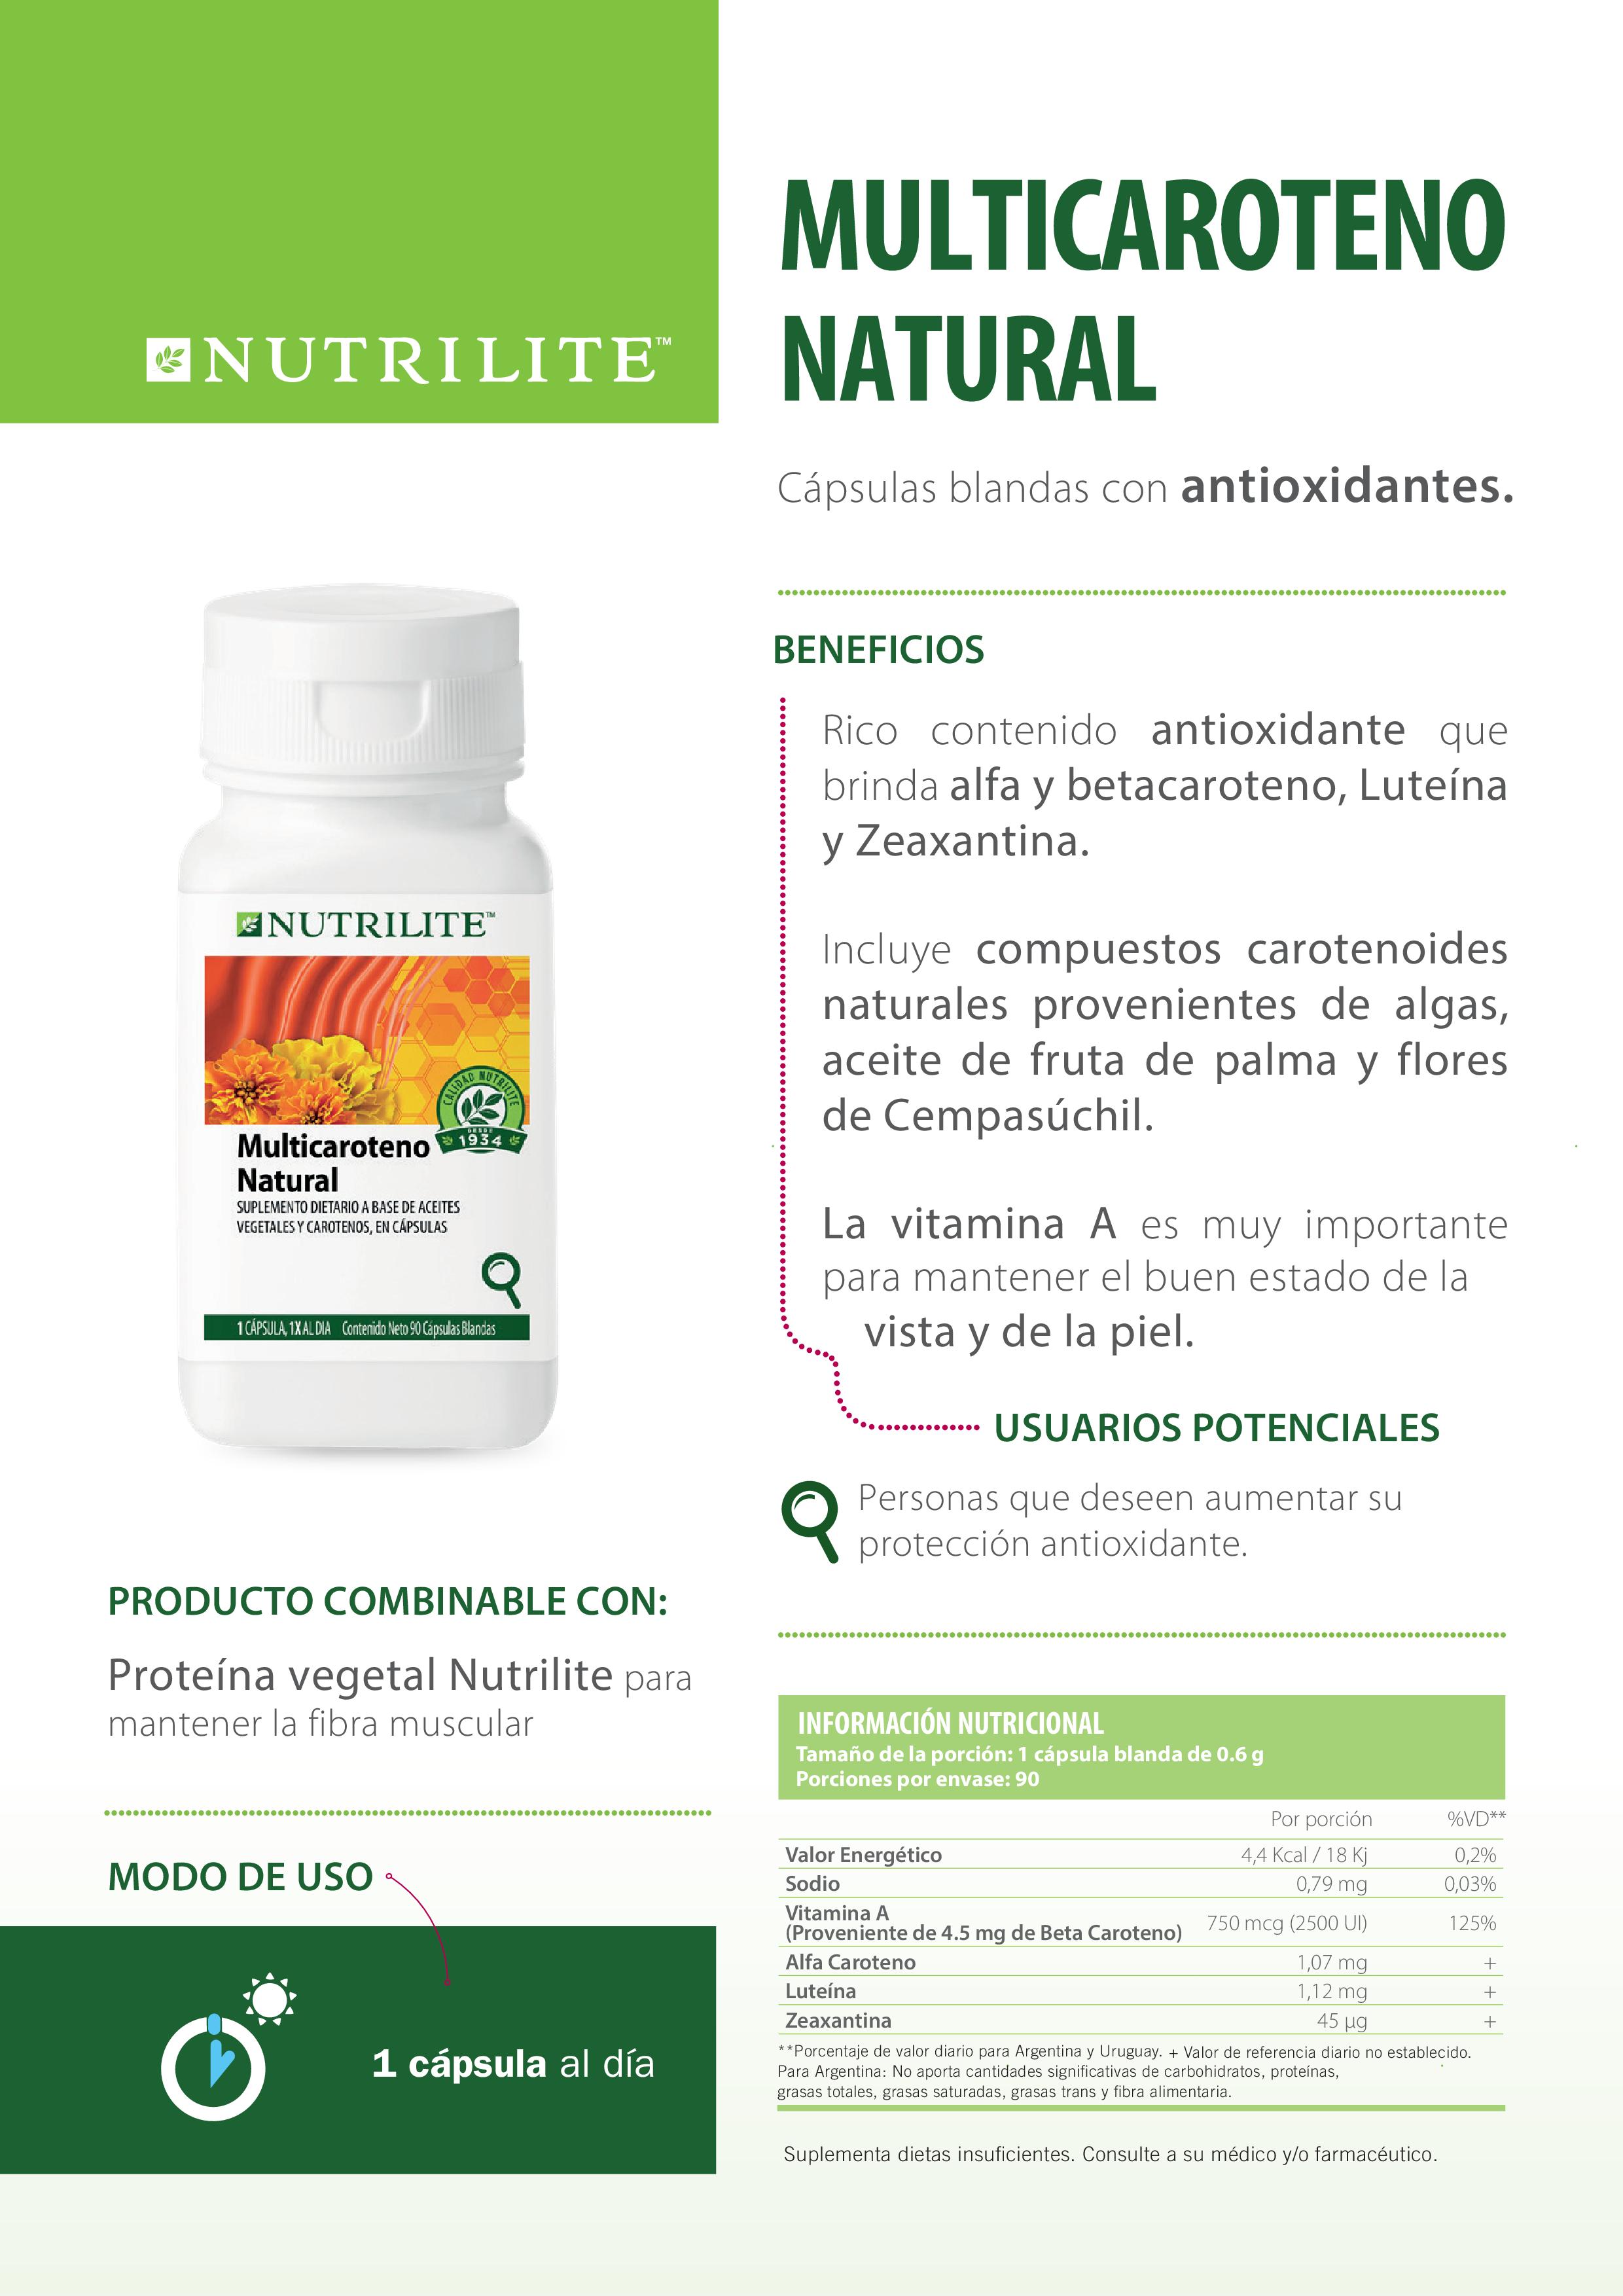 Multicaroteno natural Nutrilite